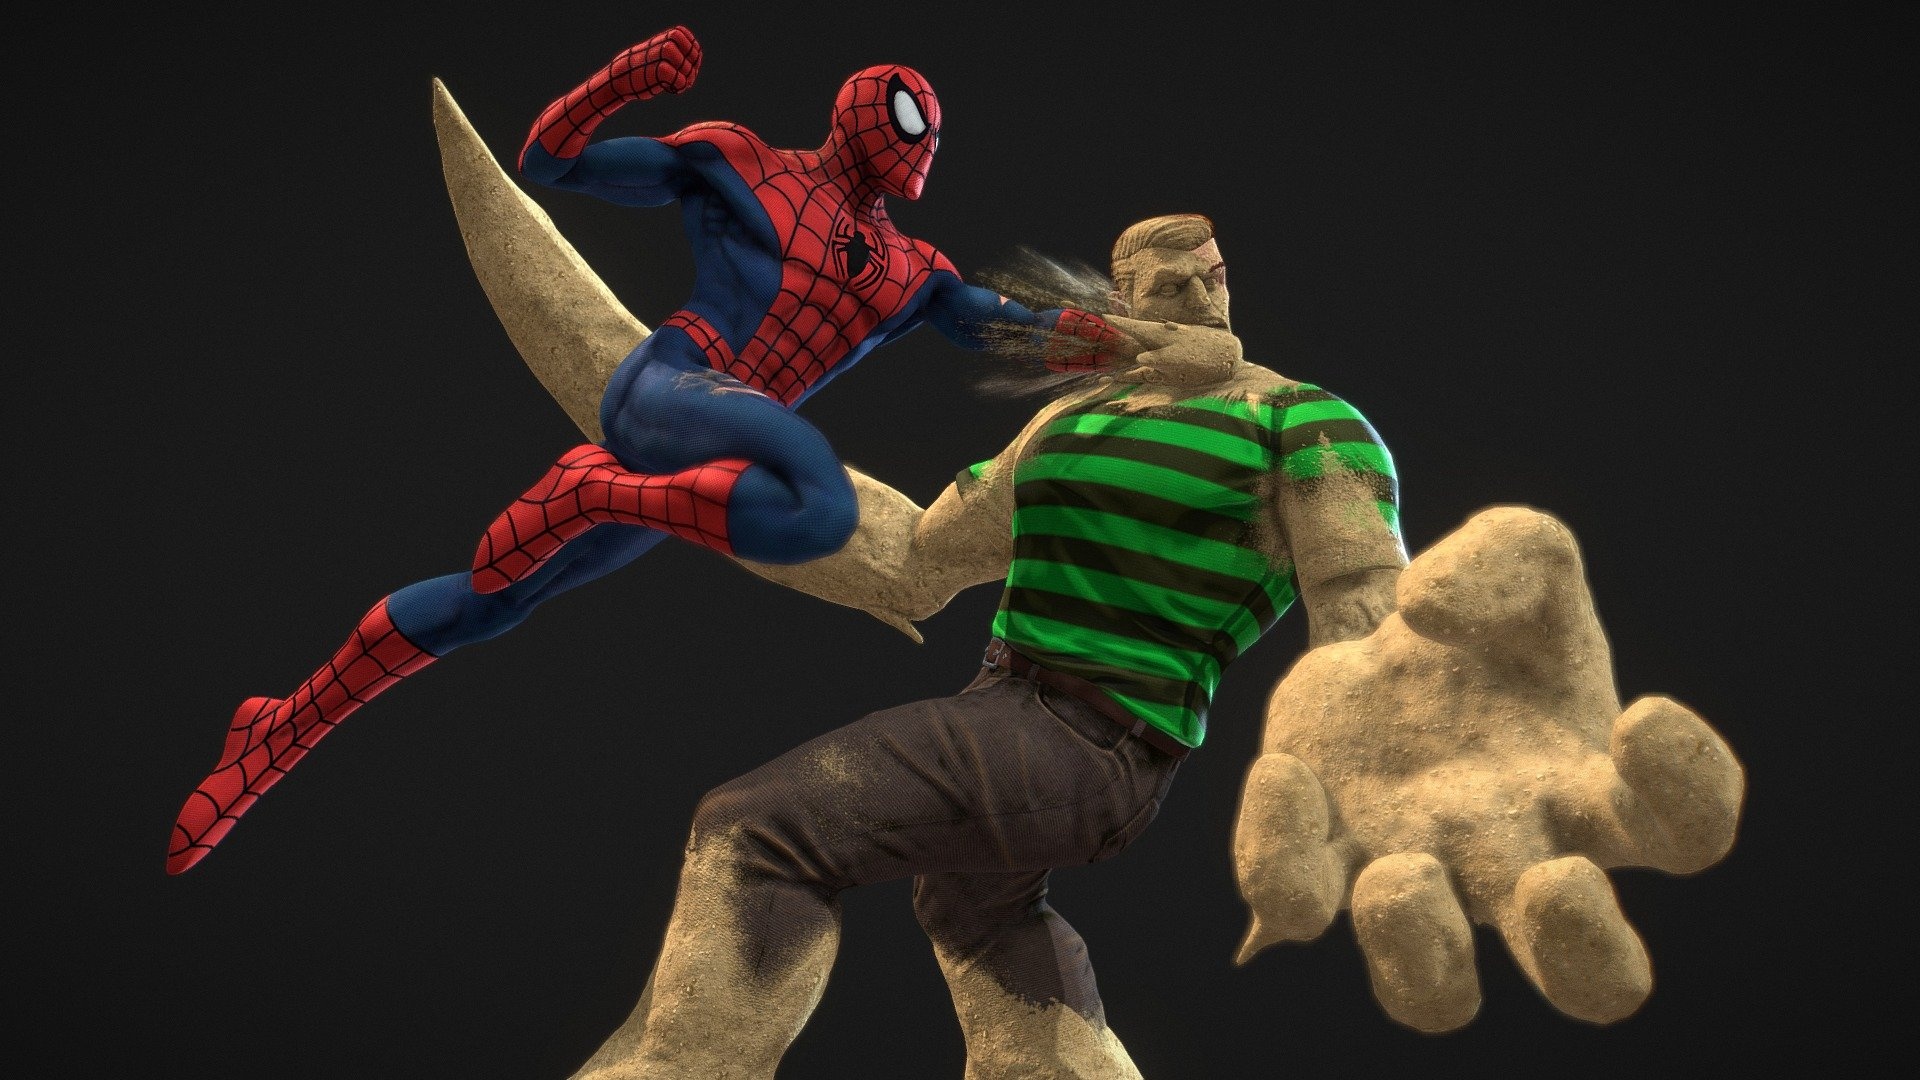 Spider Man vs Sandman, Royalty-free 3D model, Anderson Barges, Sketchfab store, 1920x1080 Full HD Desktop